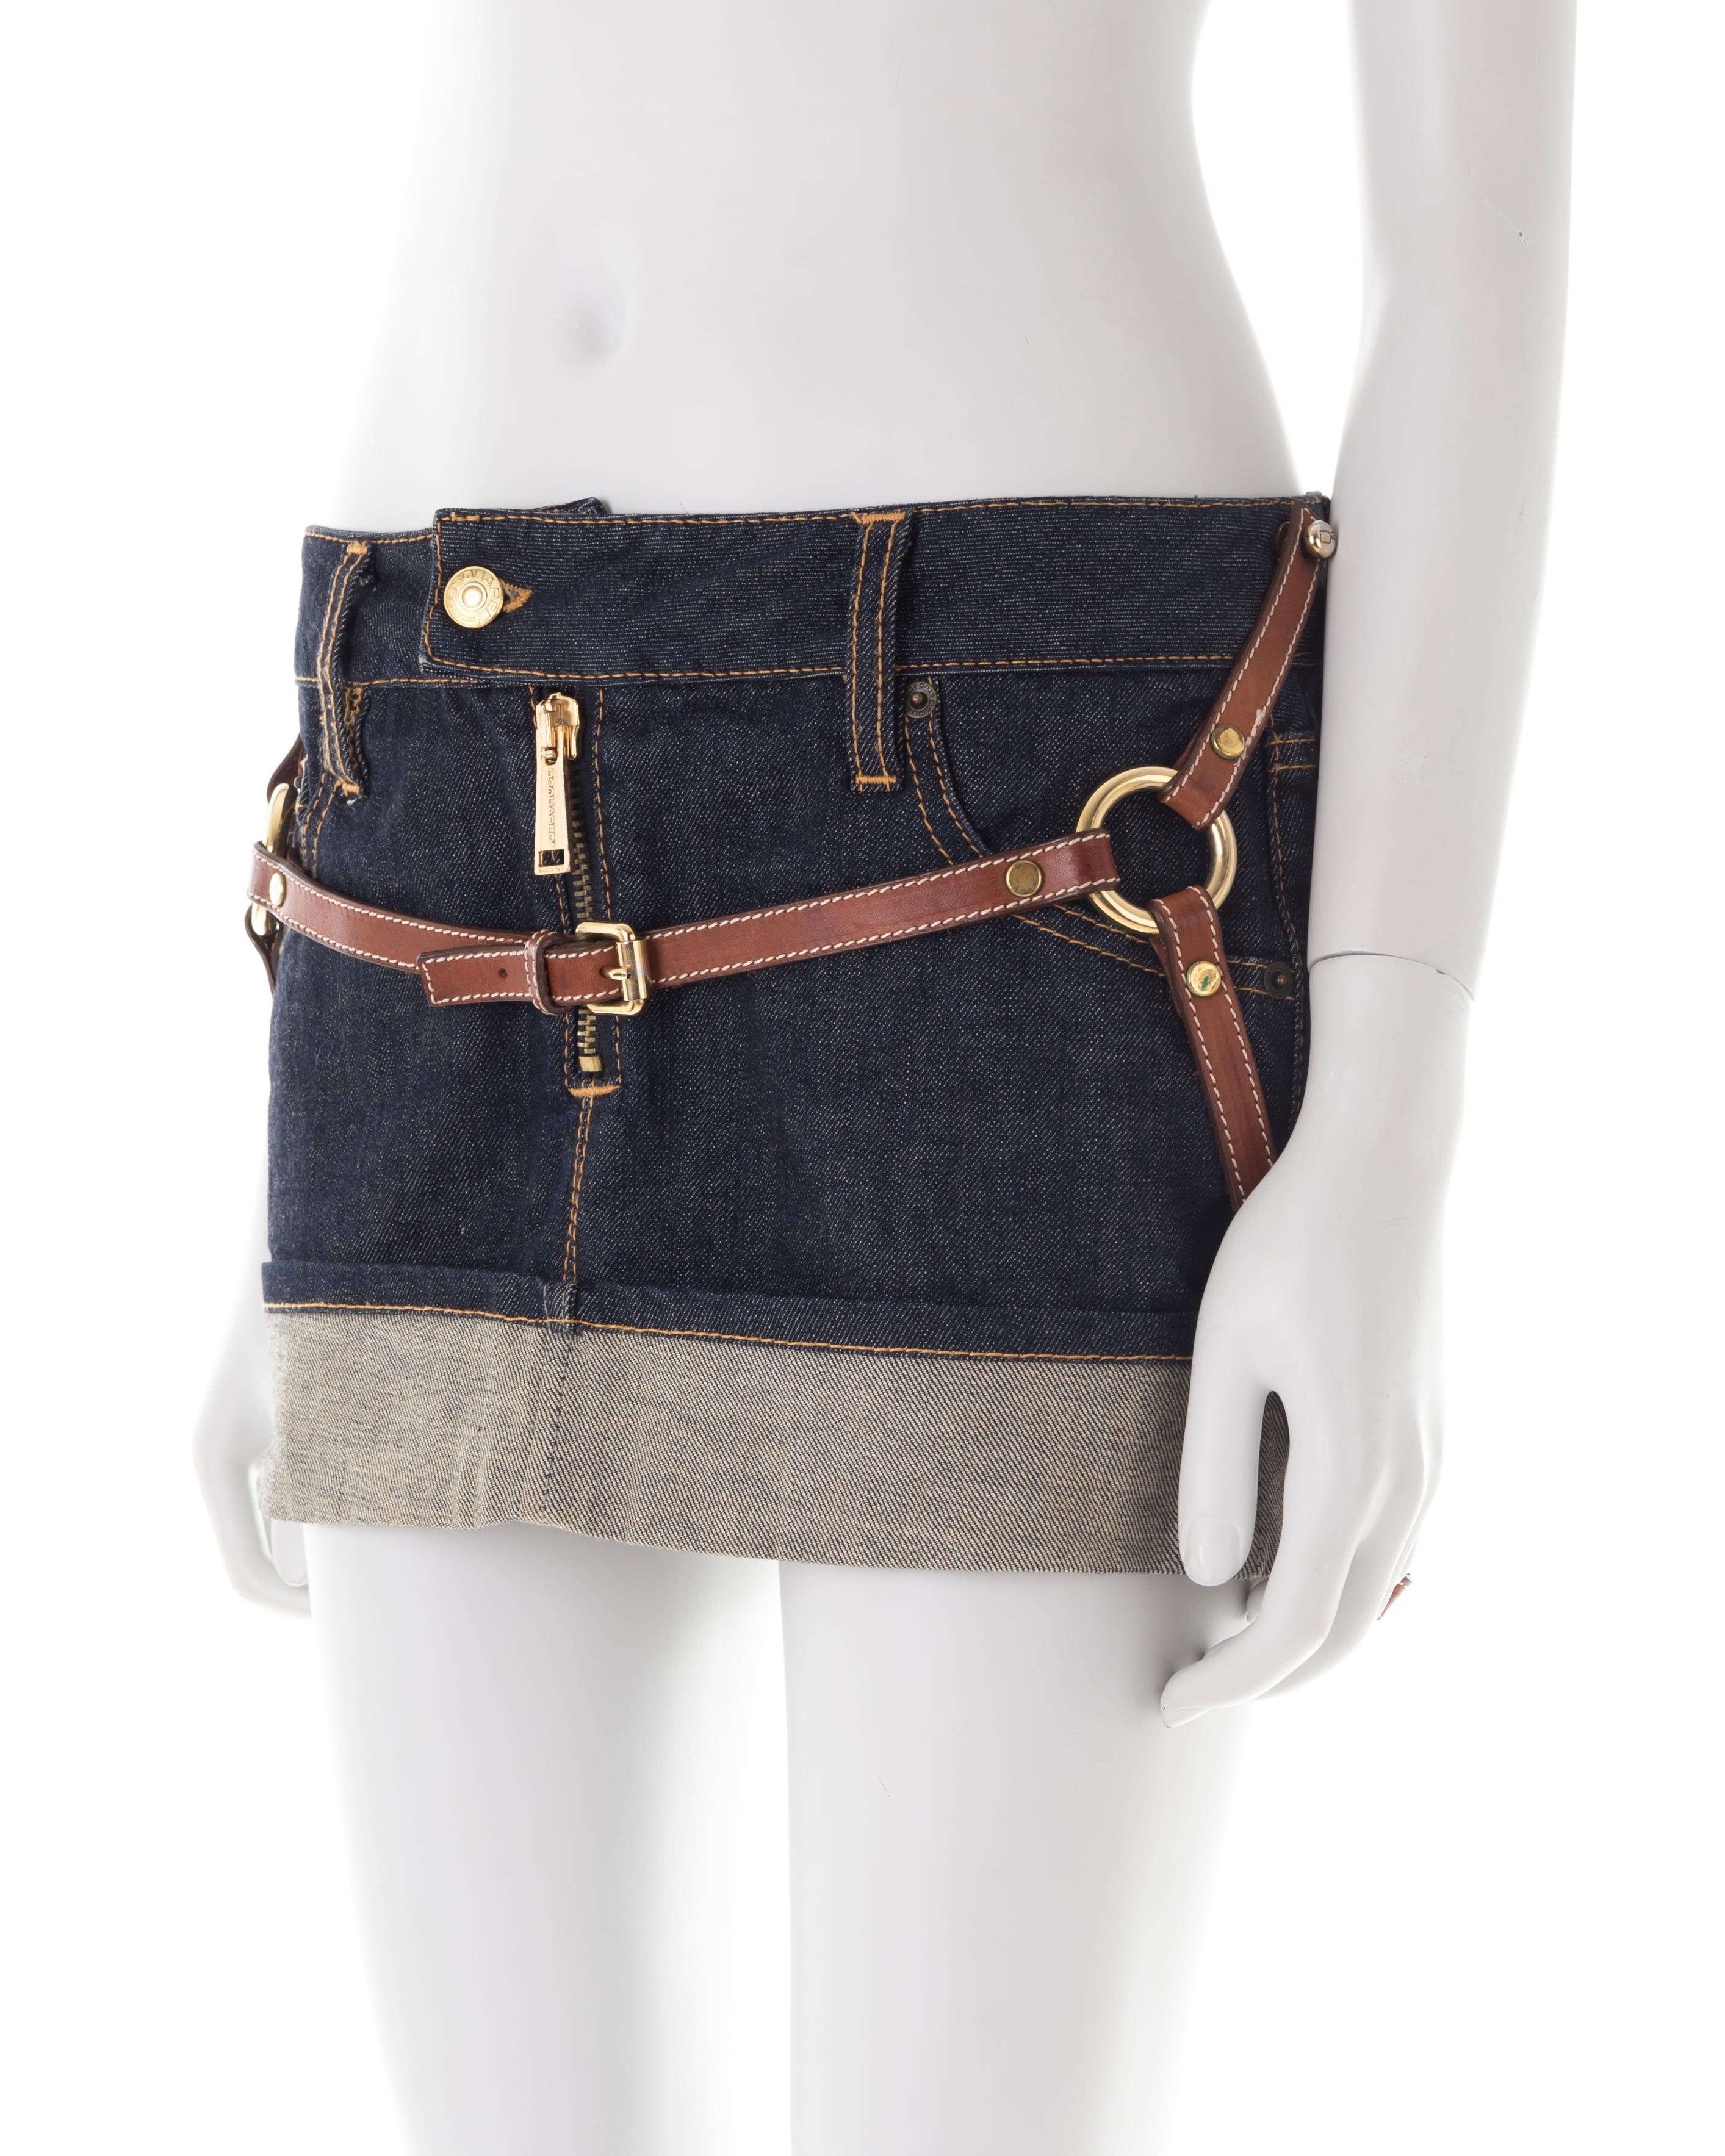 - Dark wash denim mini skirt
- Front zipper
- Brown leather adjustable straps with golden rings
- Bottom cuff